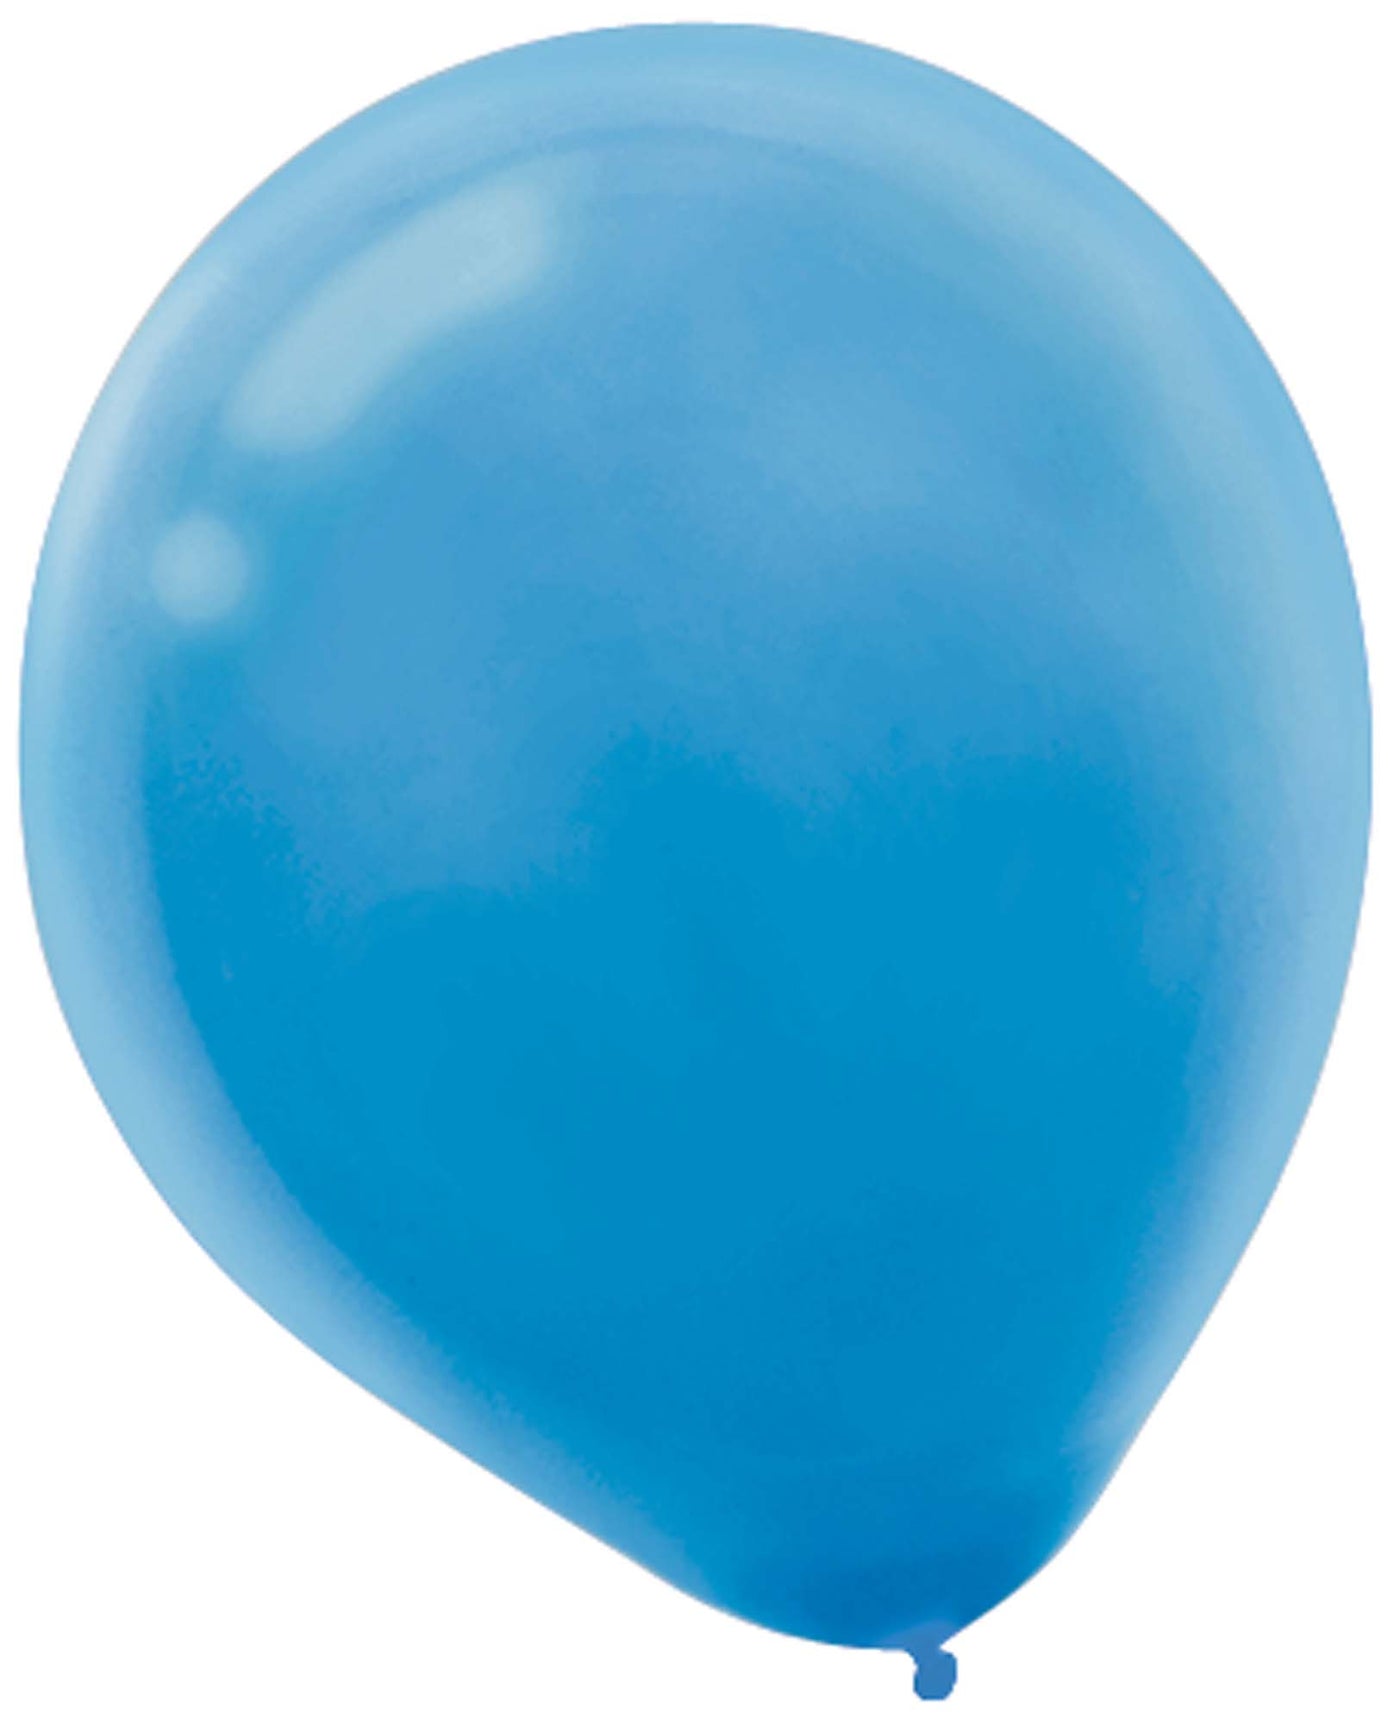 Powder Blue Latex Balloons 100ct